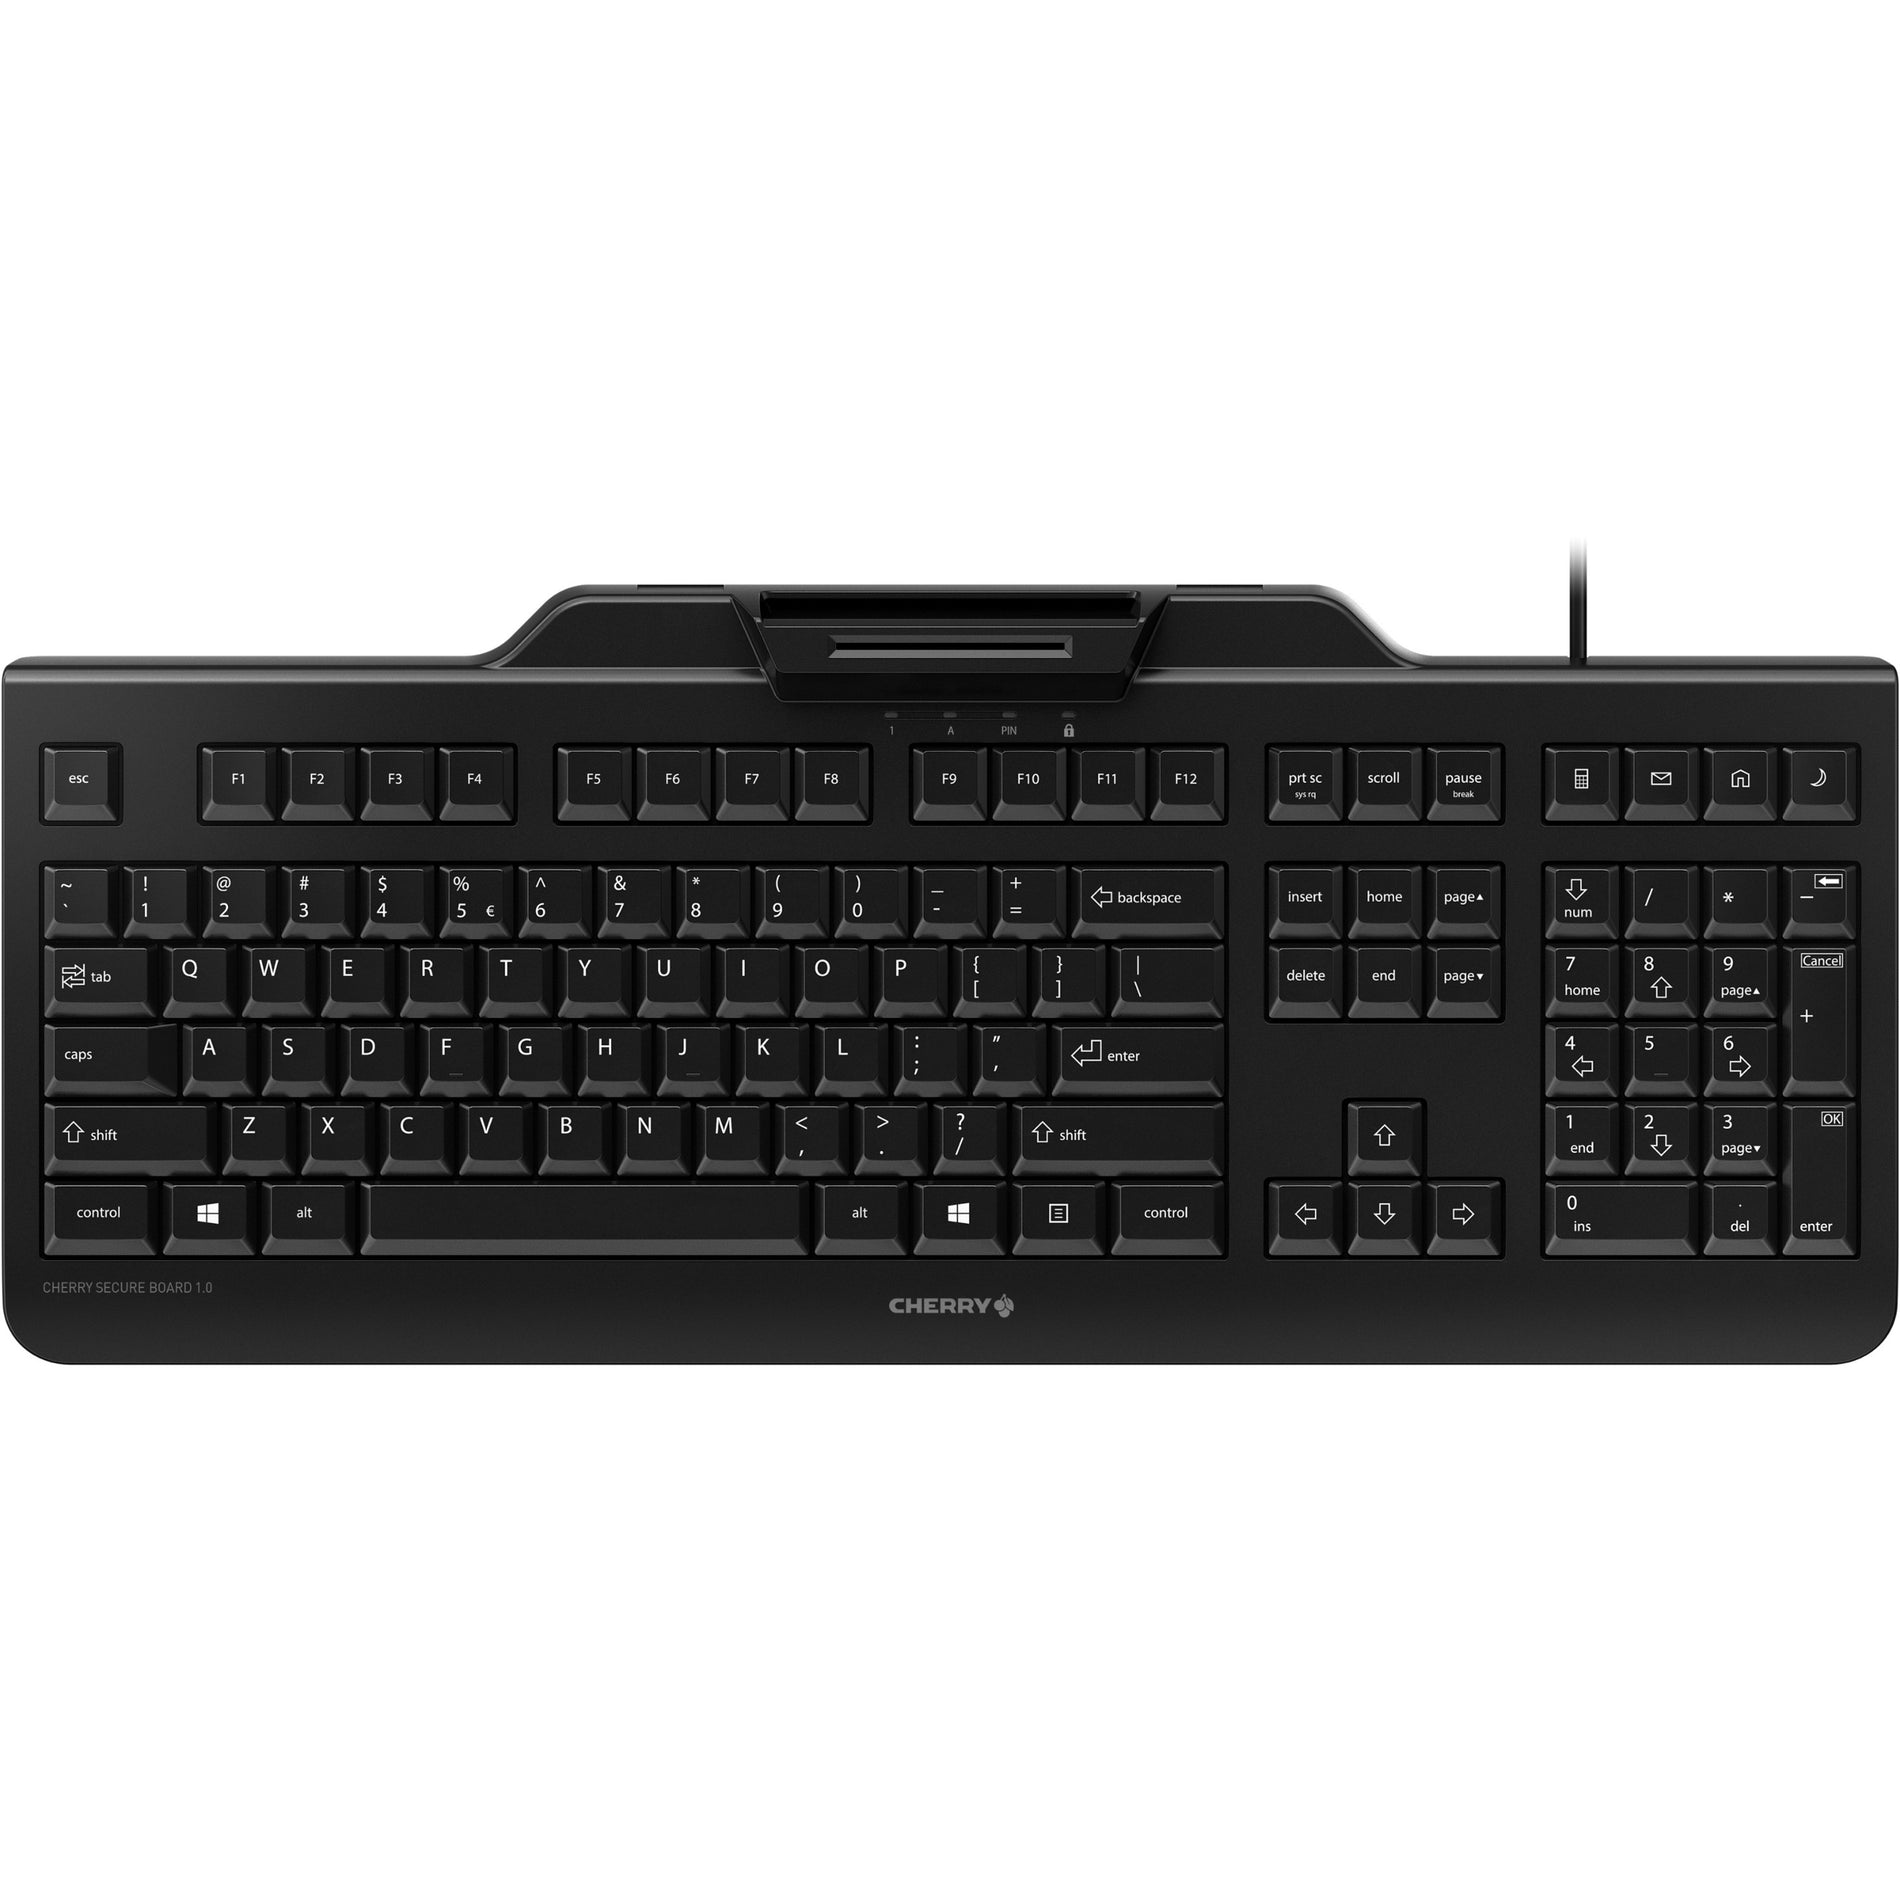 CHERRY JK-A0400EU-2 SECURE BOARD 1.0 Keyboard, Black USB Keyboard with Smart Card